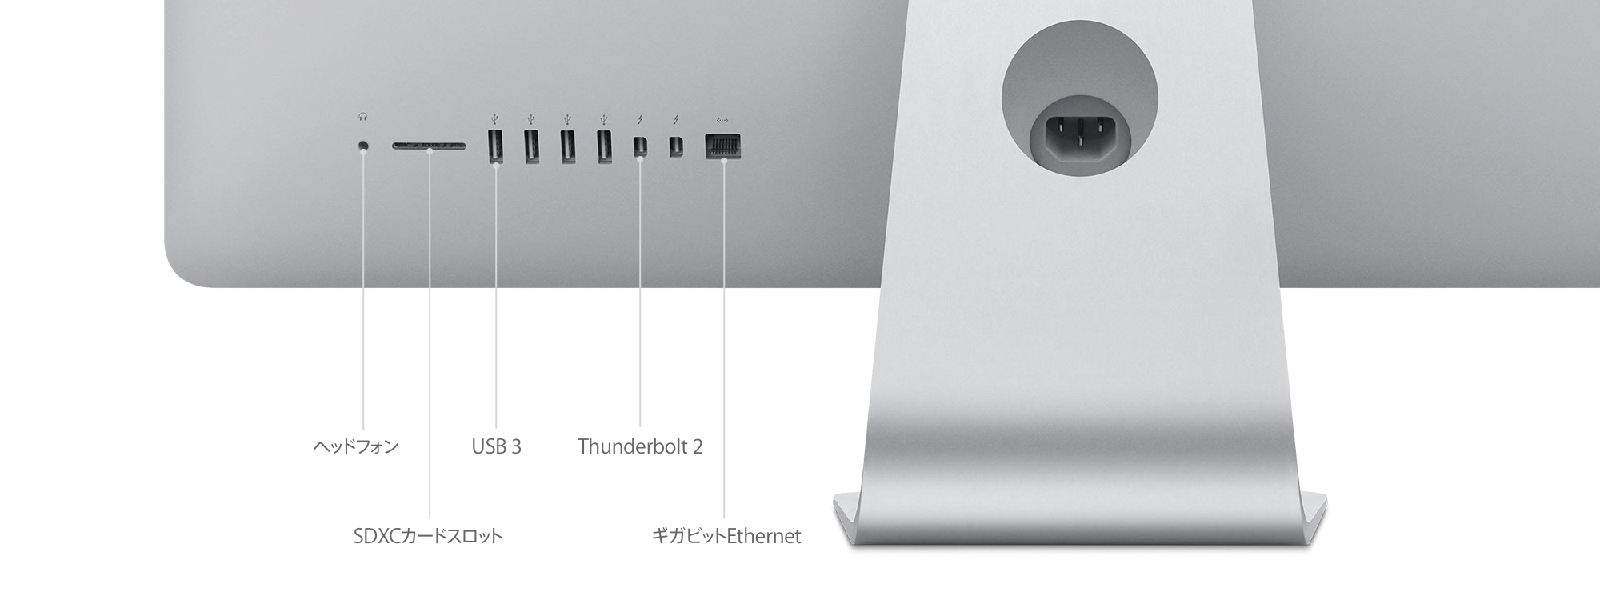 iMac Retina 4K, .5 inch, Late    技術仕様 日本